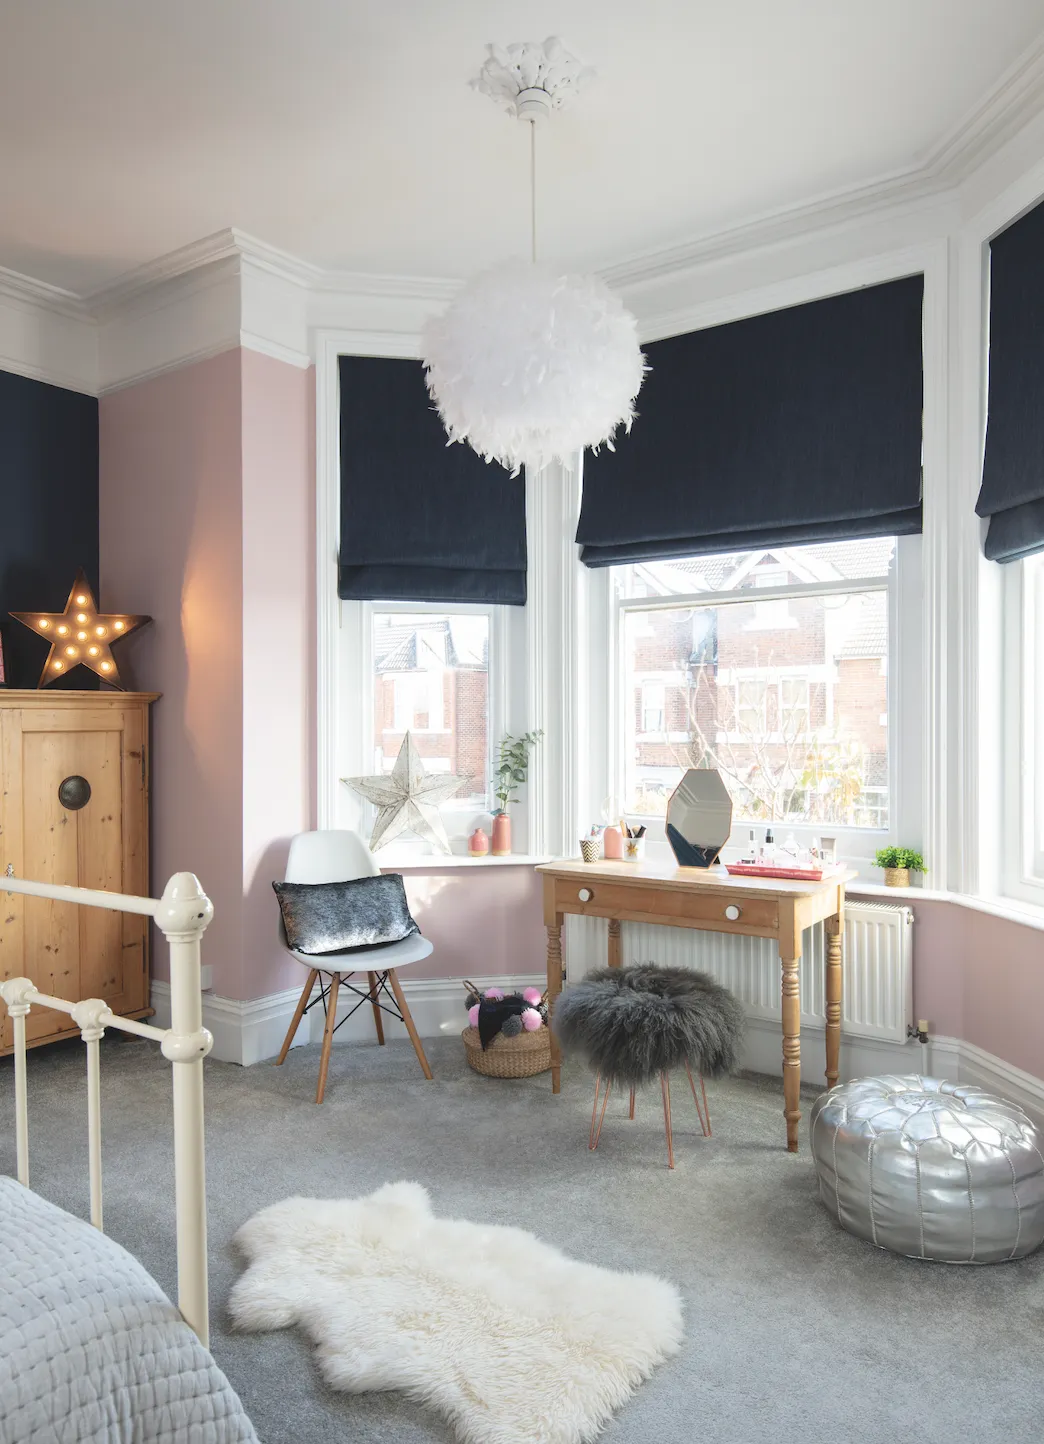 Bedroom makeover: 'Reusing old furniture kept our costs down'